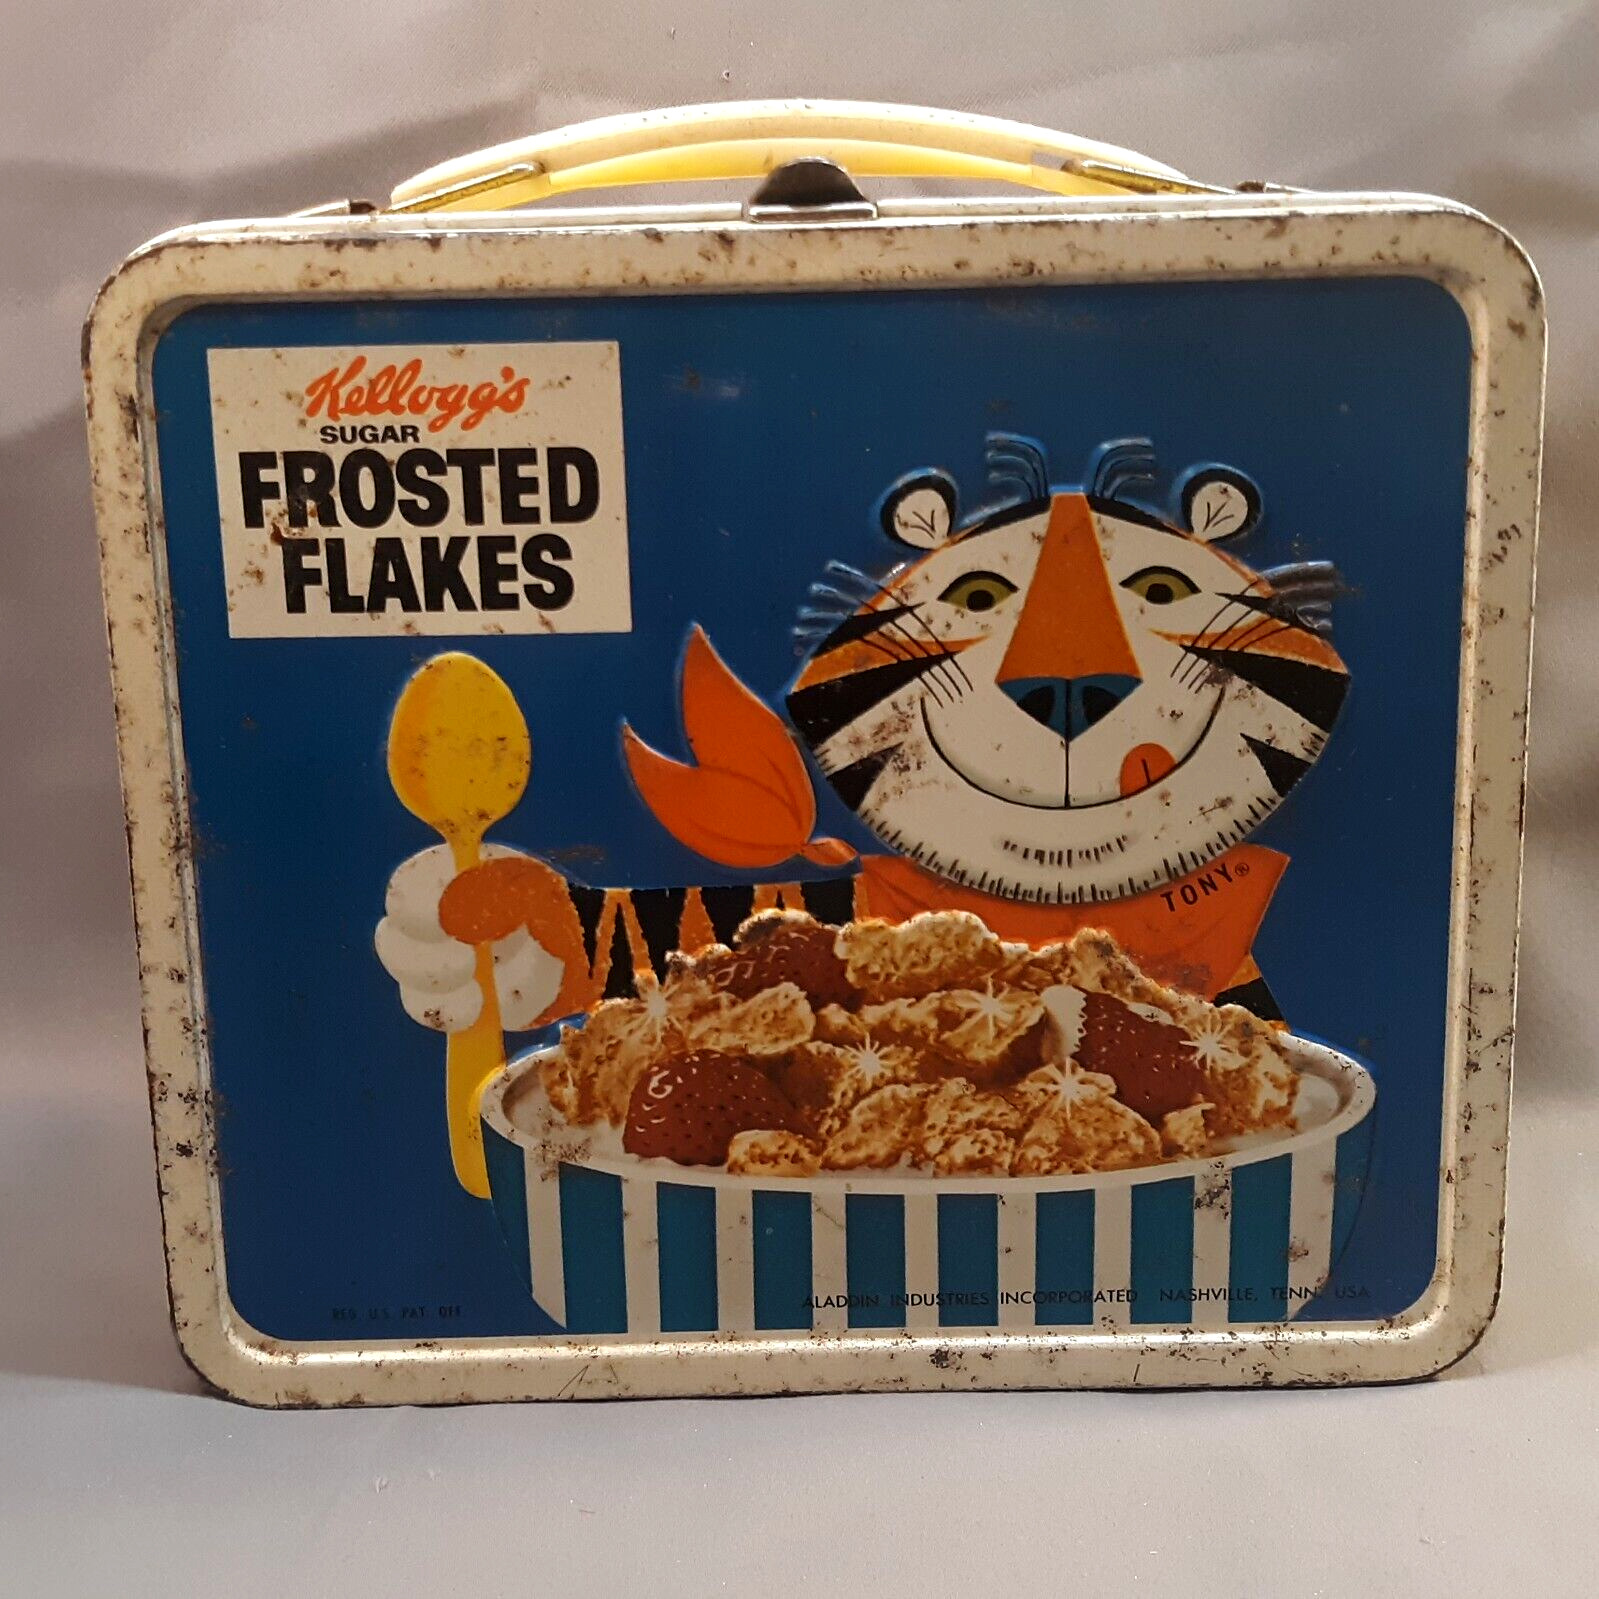 Kellogg's Cereal Child Metal Lunch Box Tony the Tiger, Rice Krispies. 1969 Era.